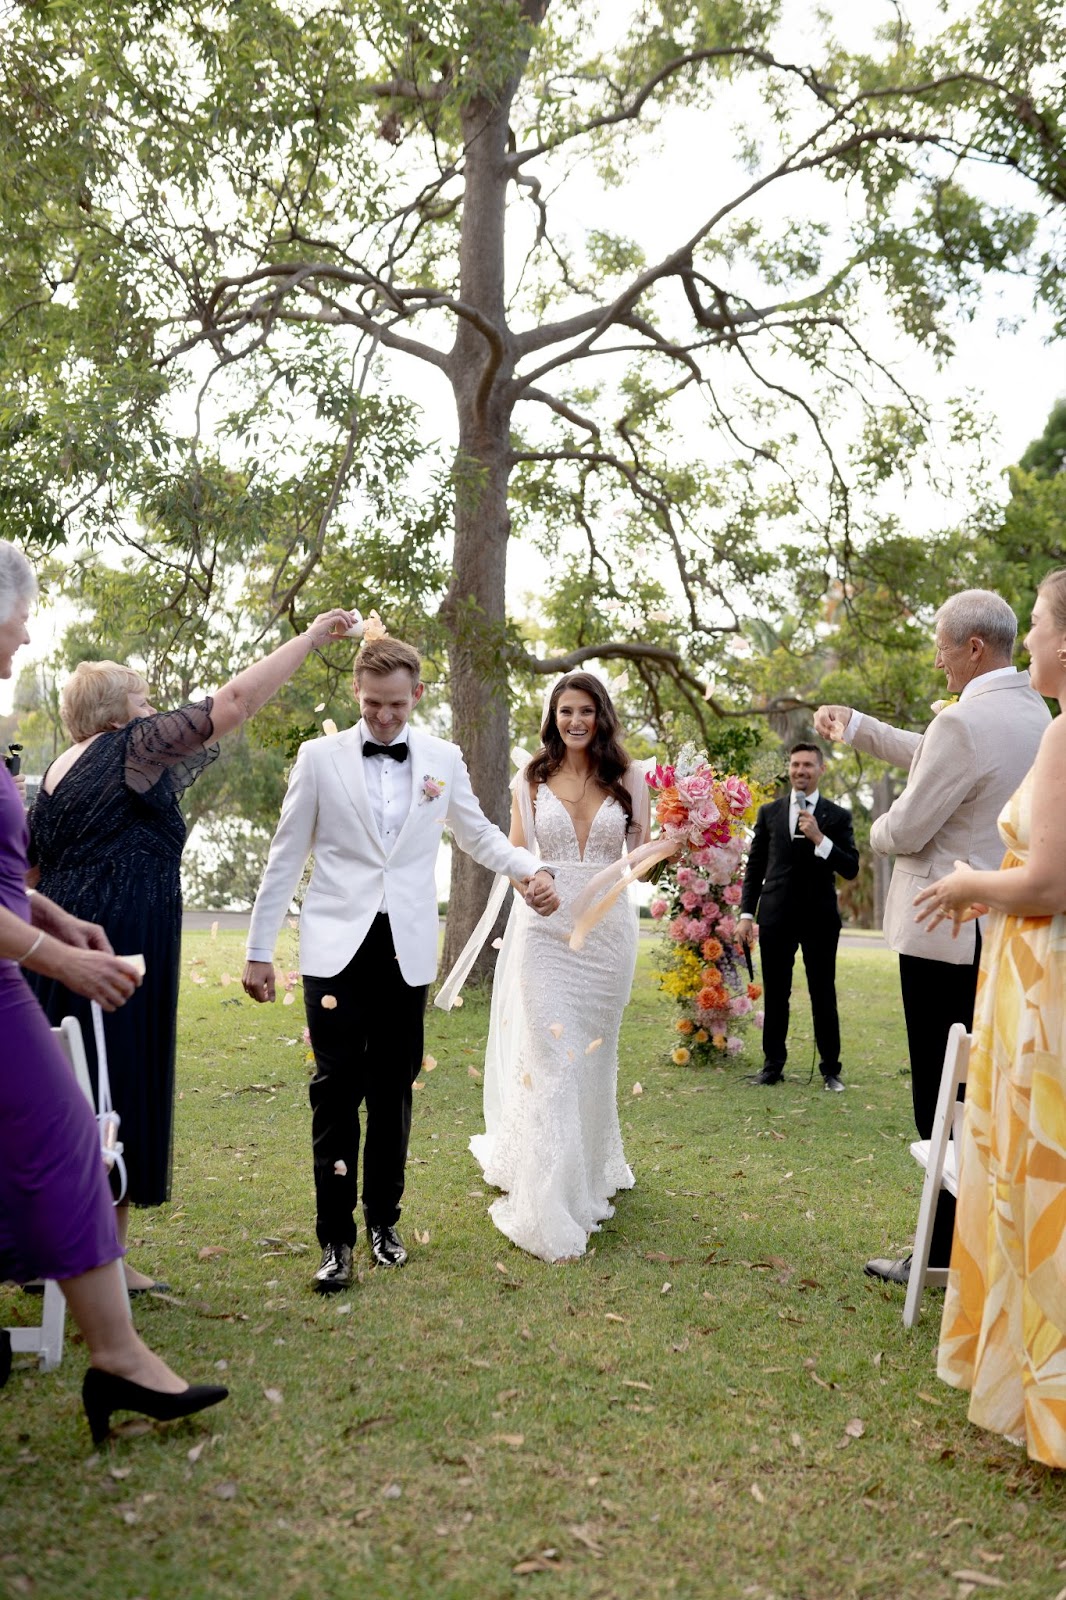 Michaellie and Kris's City-Scape Garden Wedding at Botanic House, Sydney